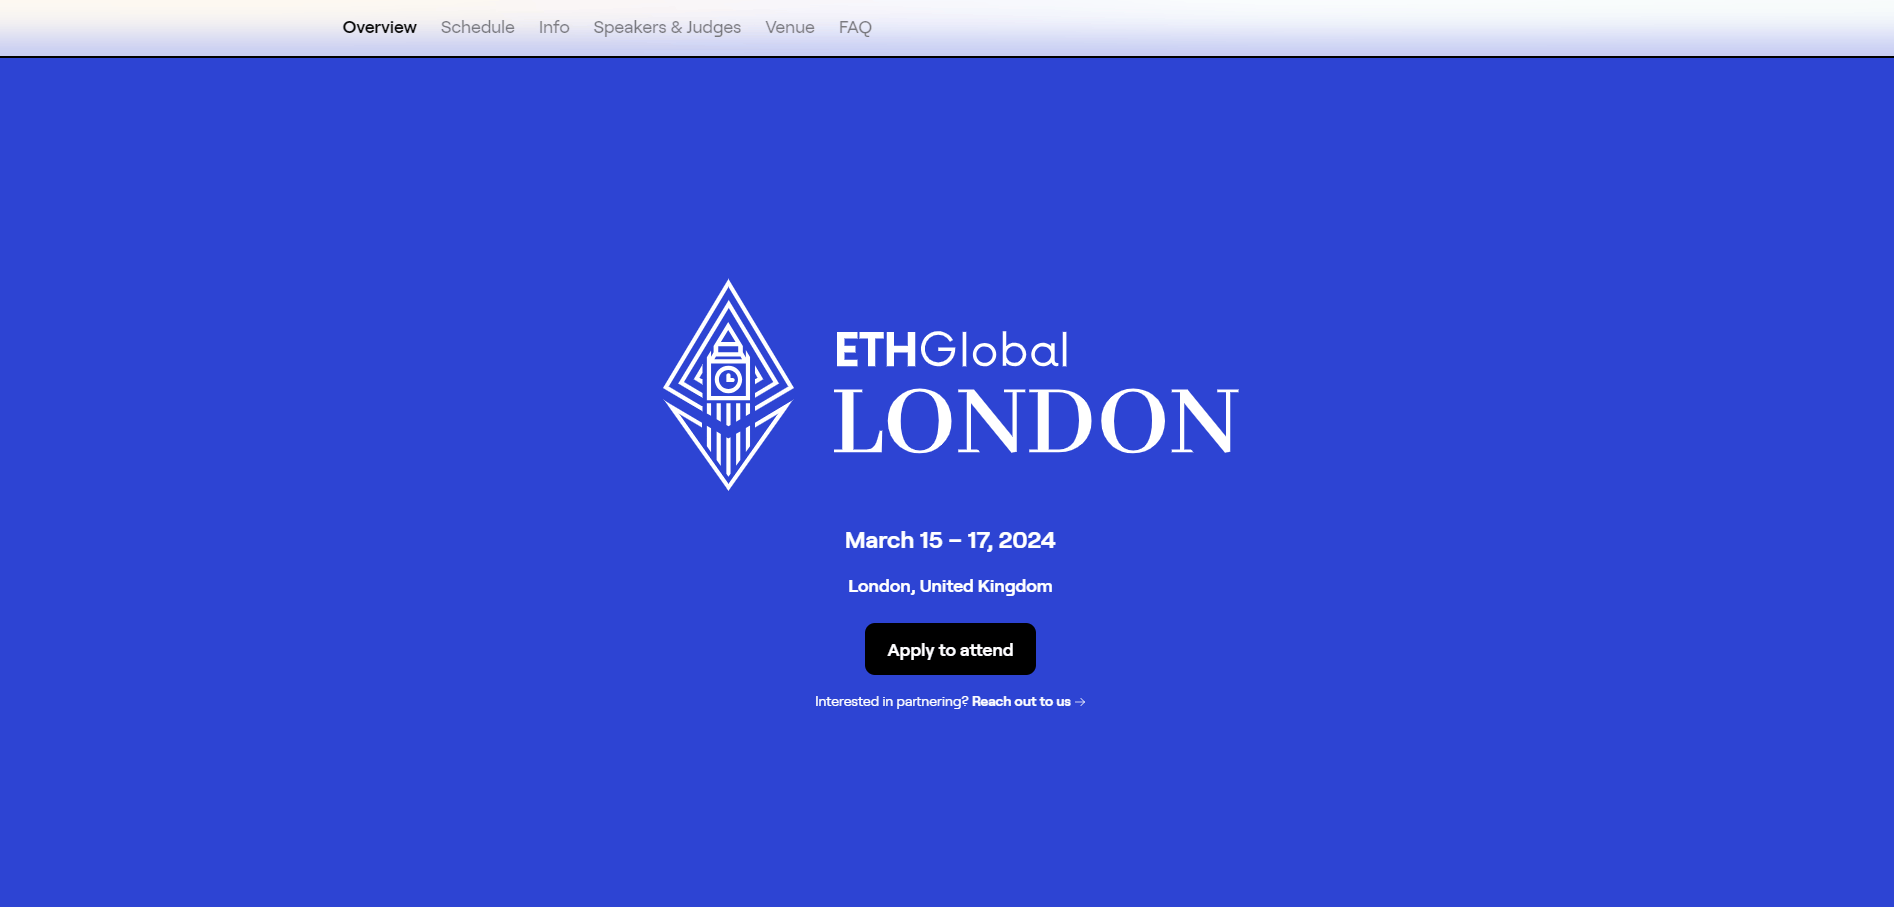 ETHGlobal London